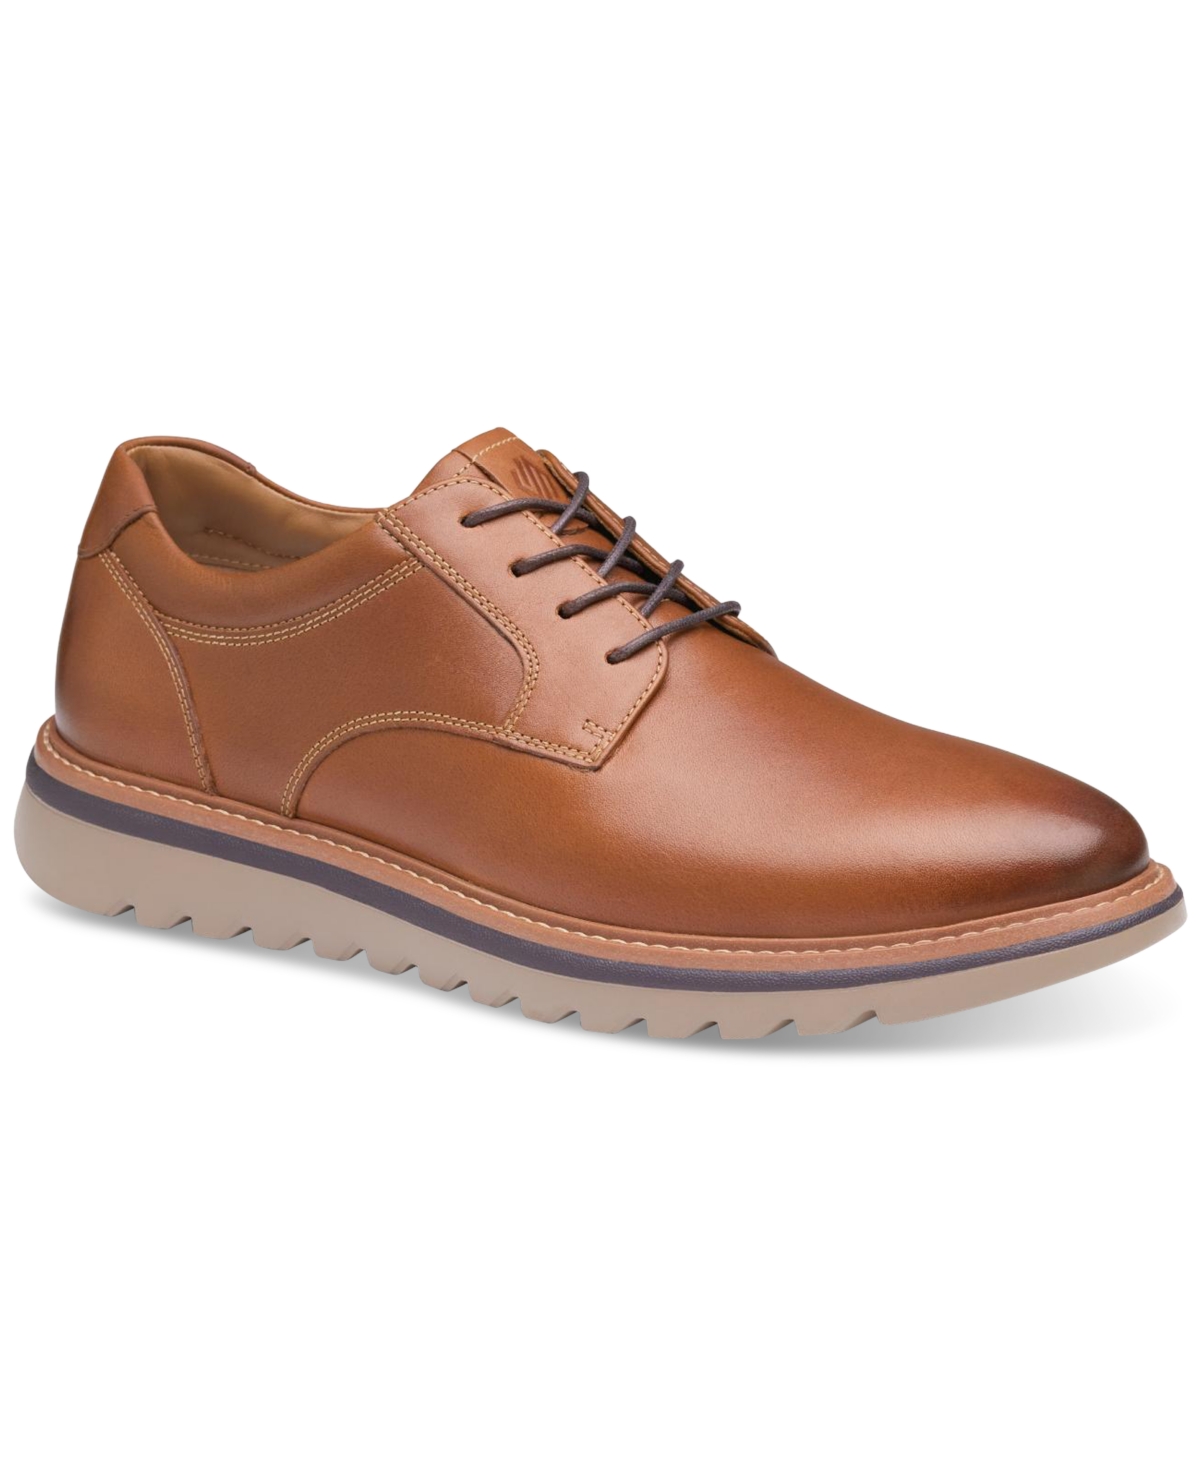 Men's Braydon Plain Toe Hybrid Dress Oxford Shoes - Navy Oiled Nubuck